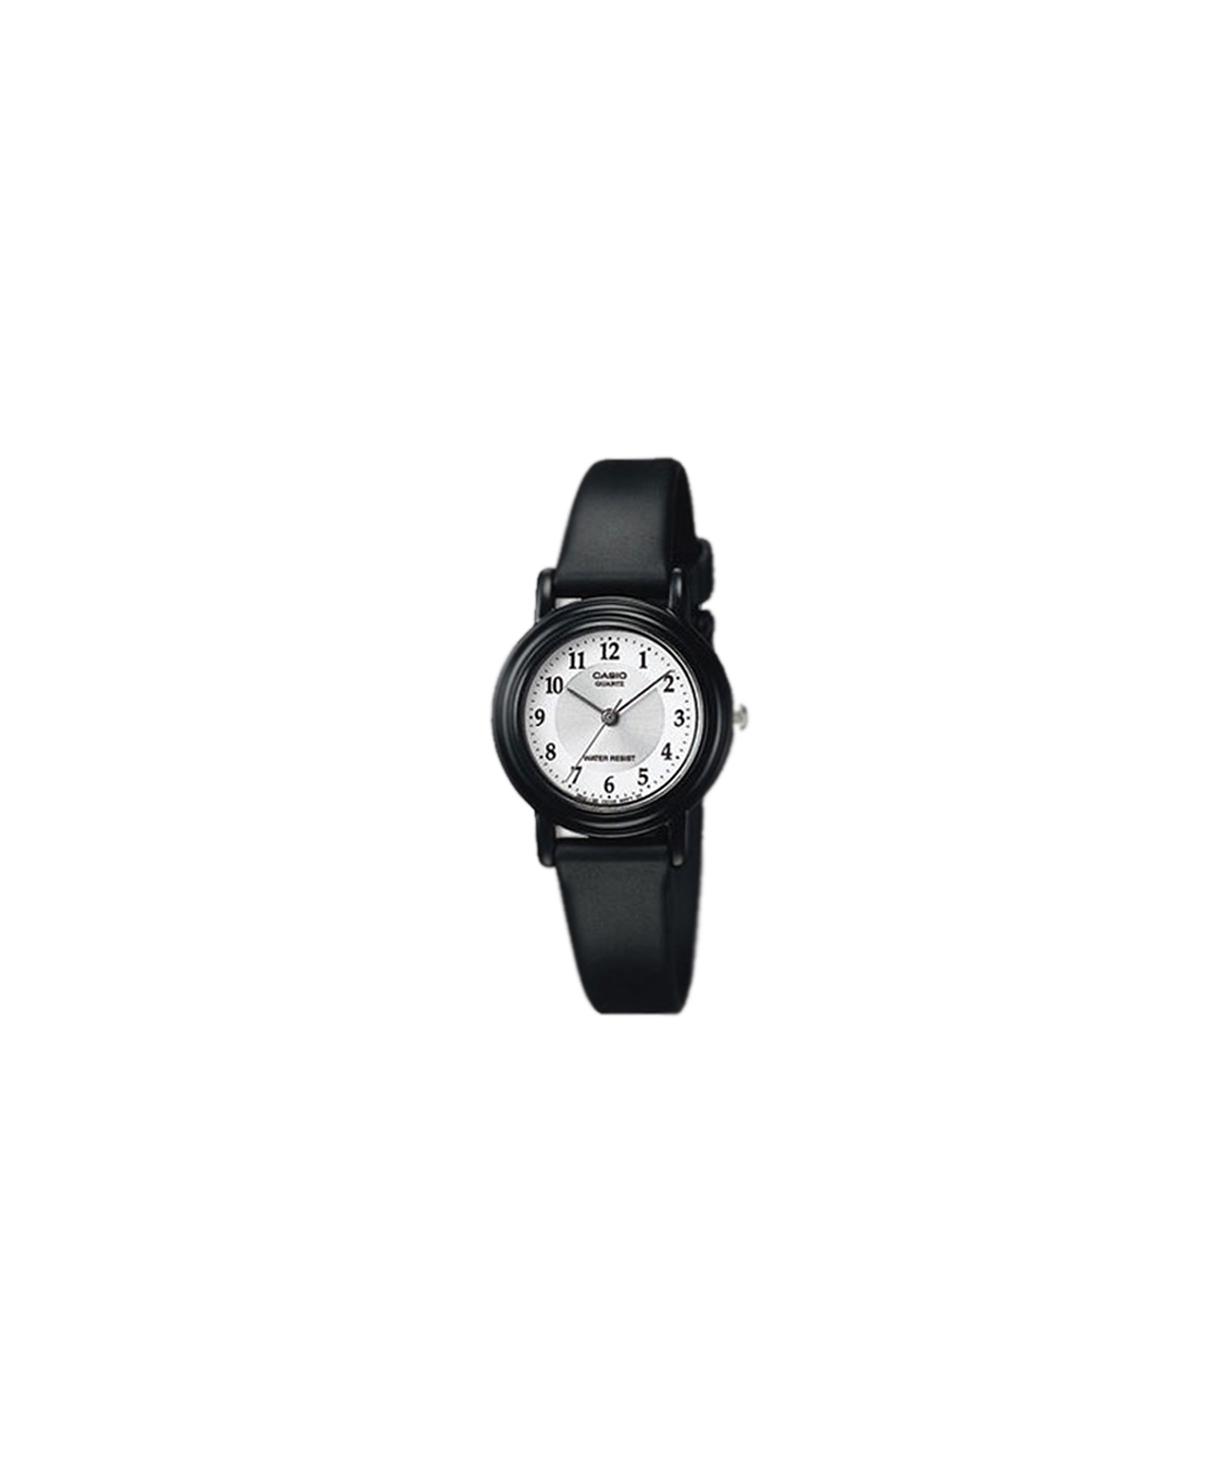 Ժամացույց  «Casio» ձեռքի  LQ-139AMV-7B3LDF